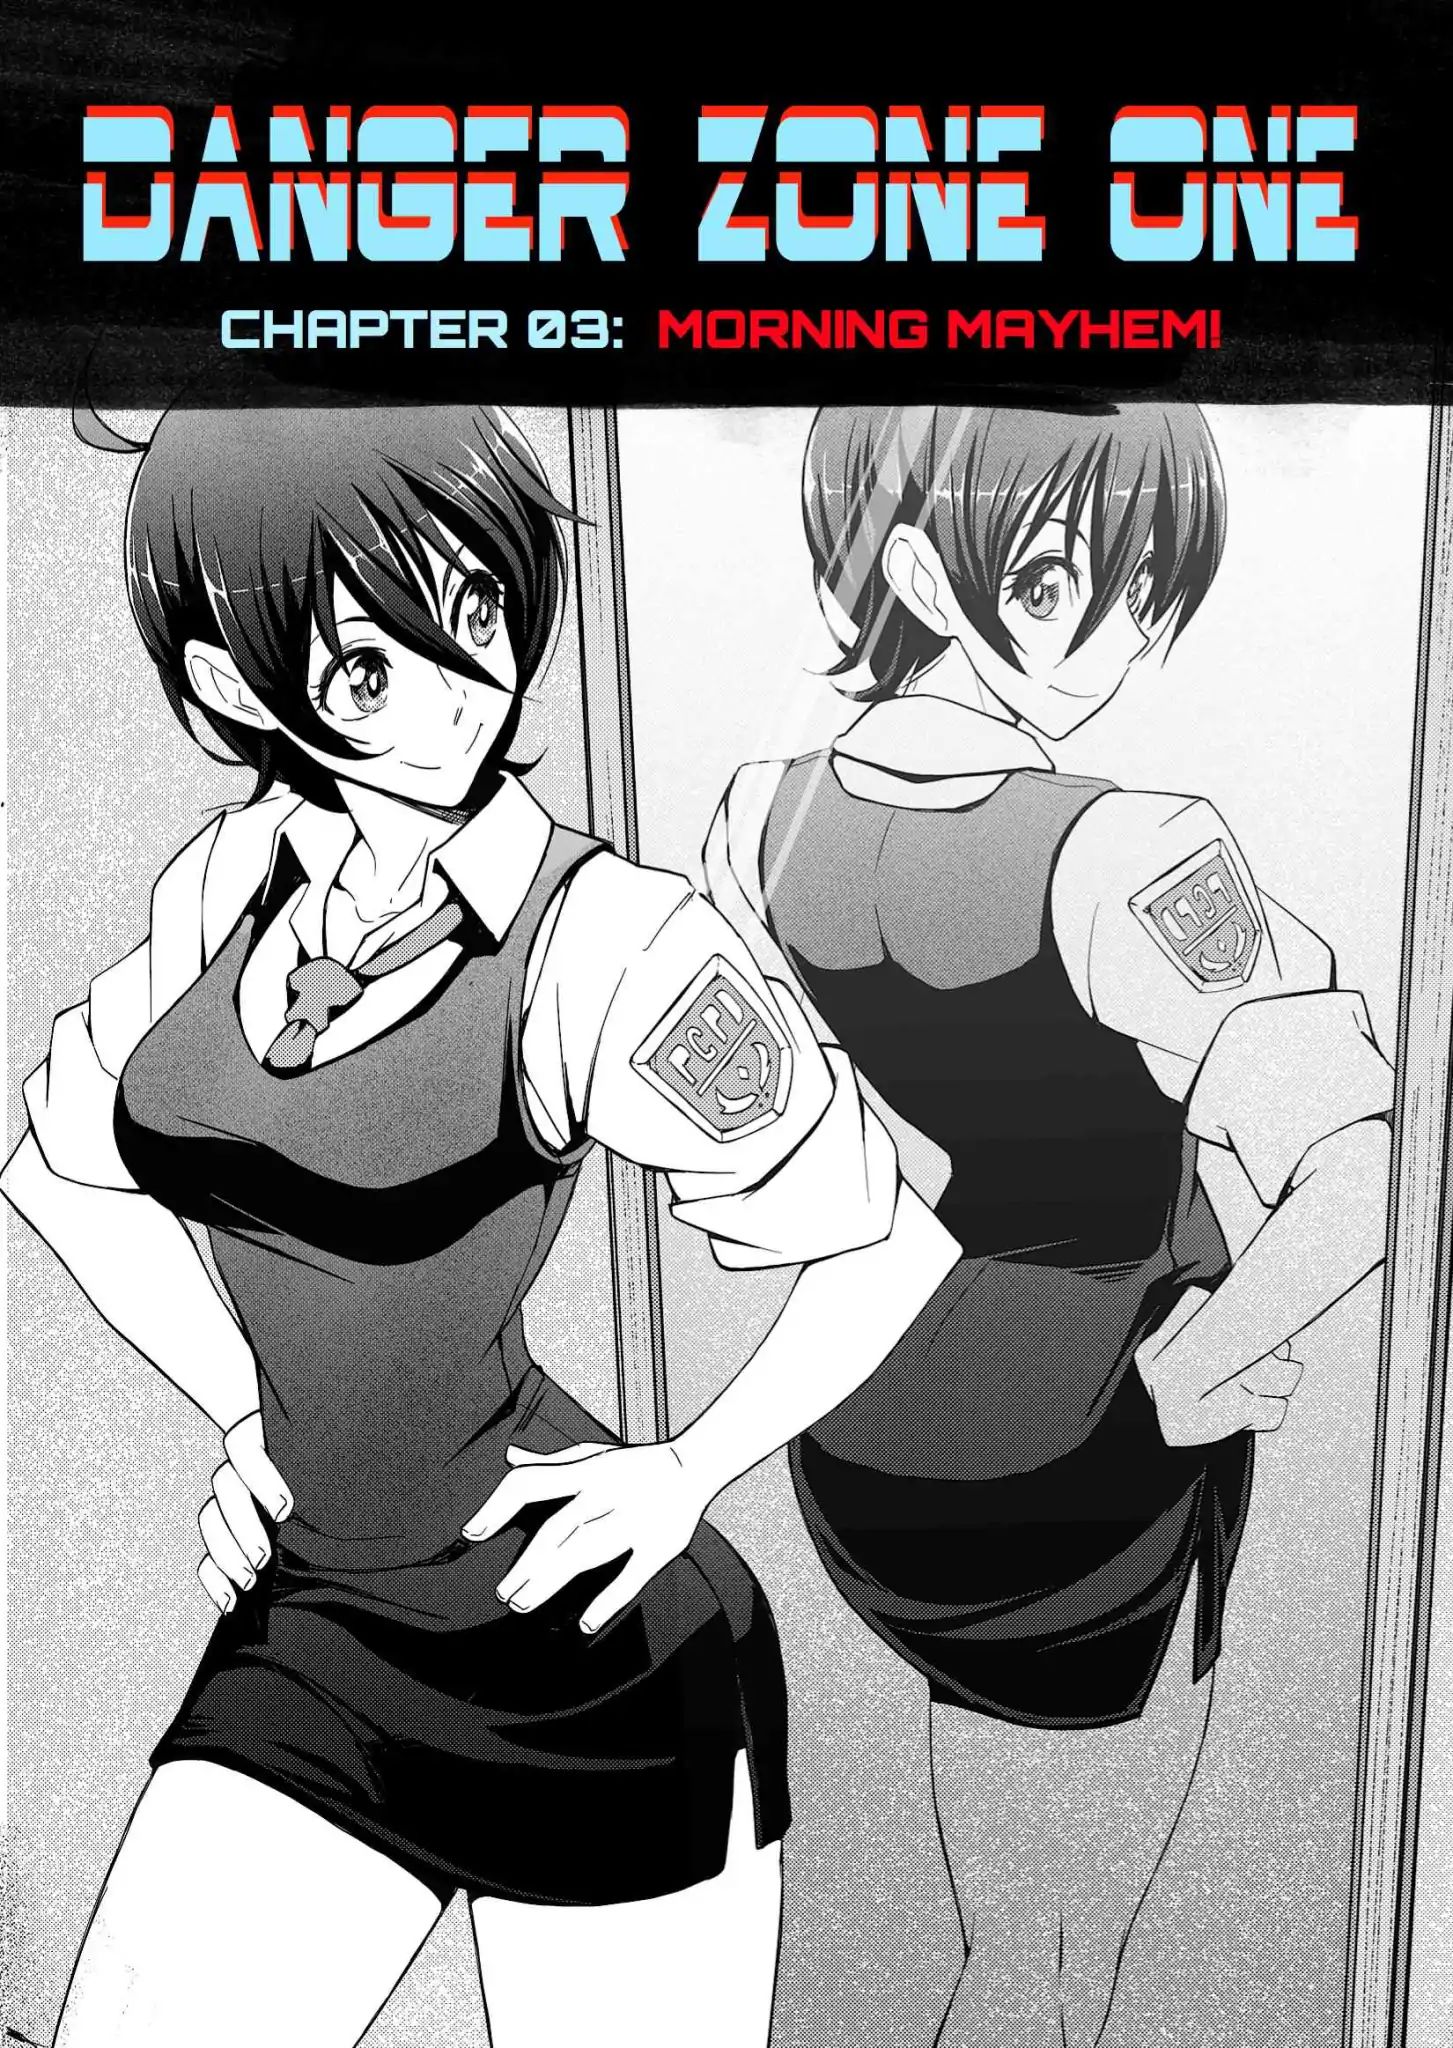 Danger Zone One Chapter 03: Morning Mayhem! - Picture 1